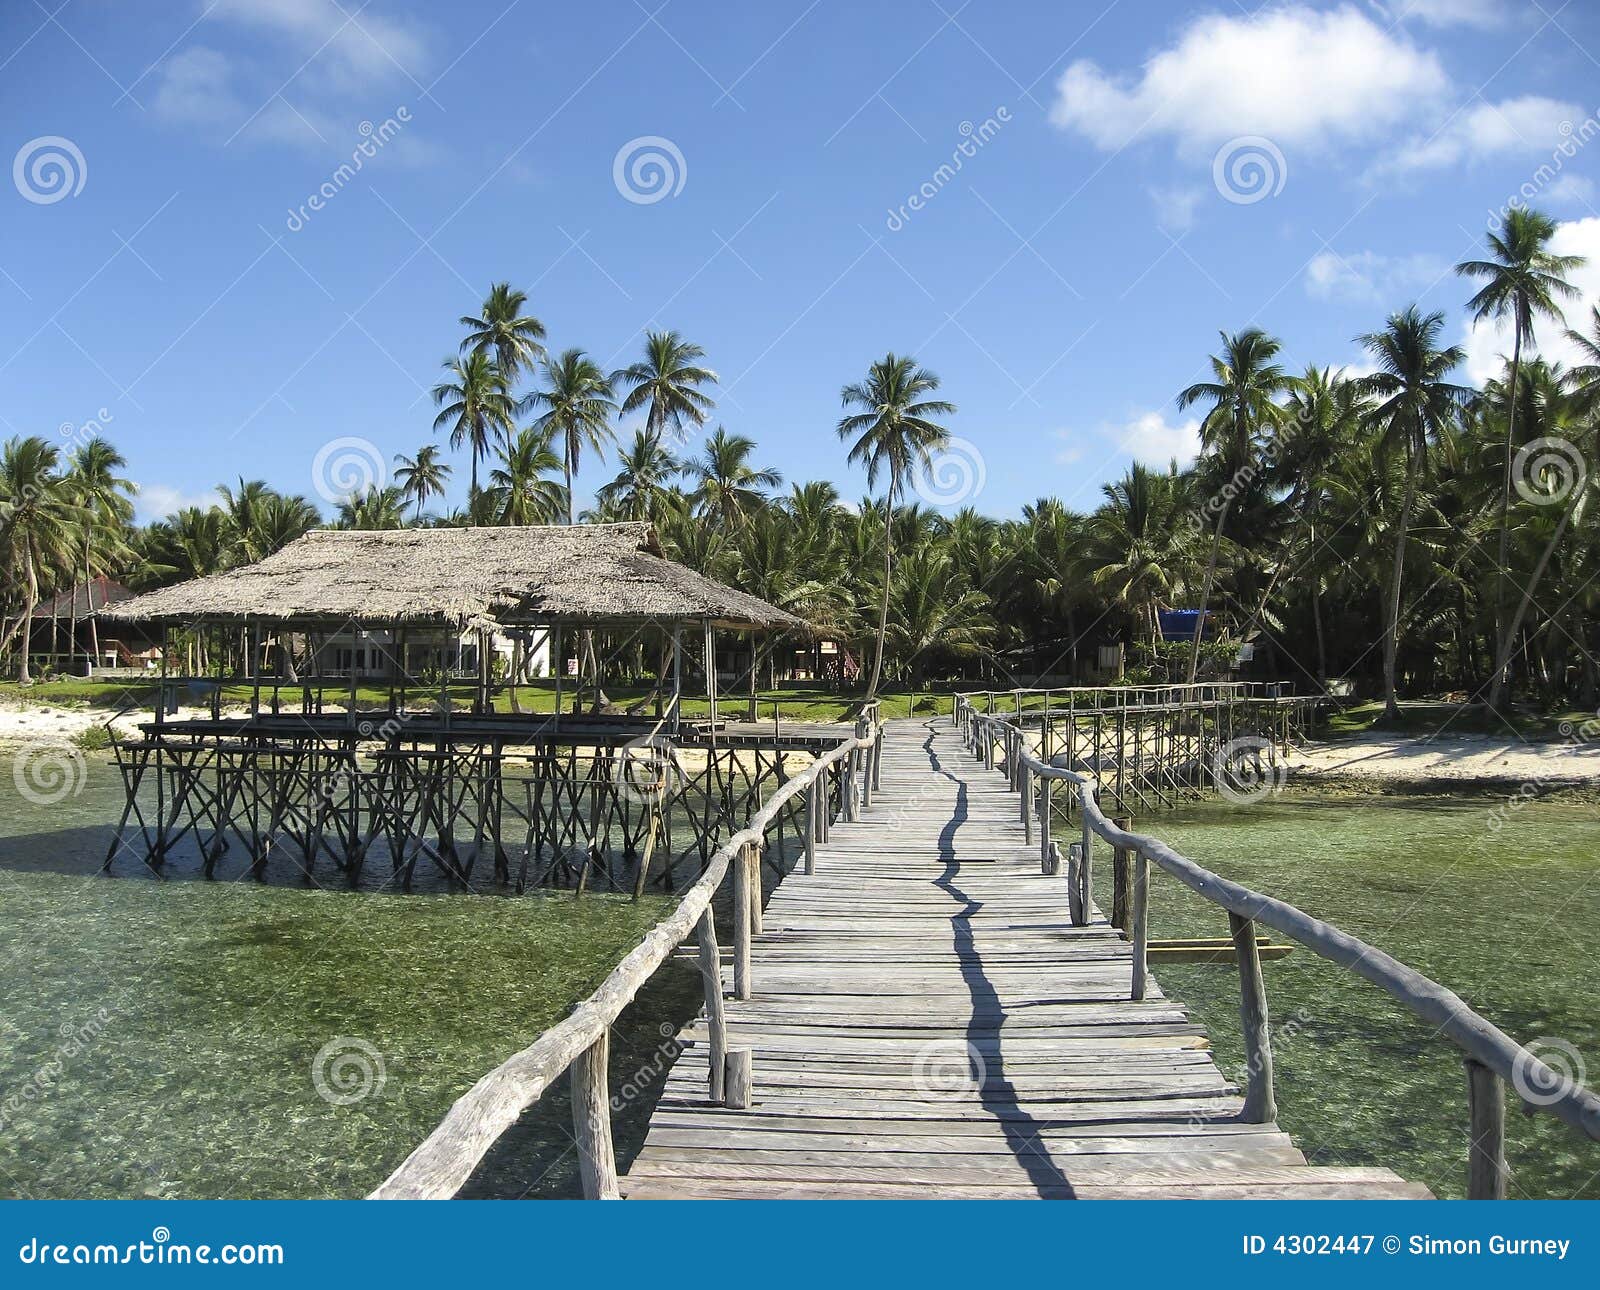 tropical siargao island wooden promenade